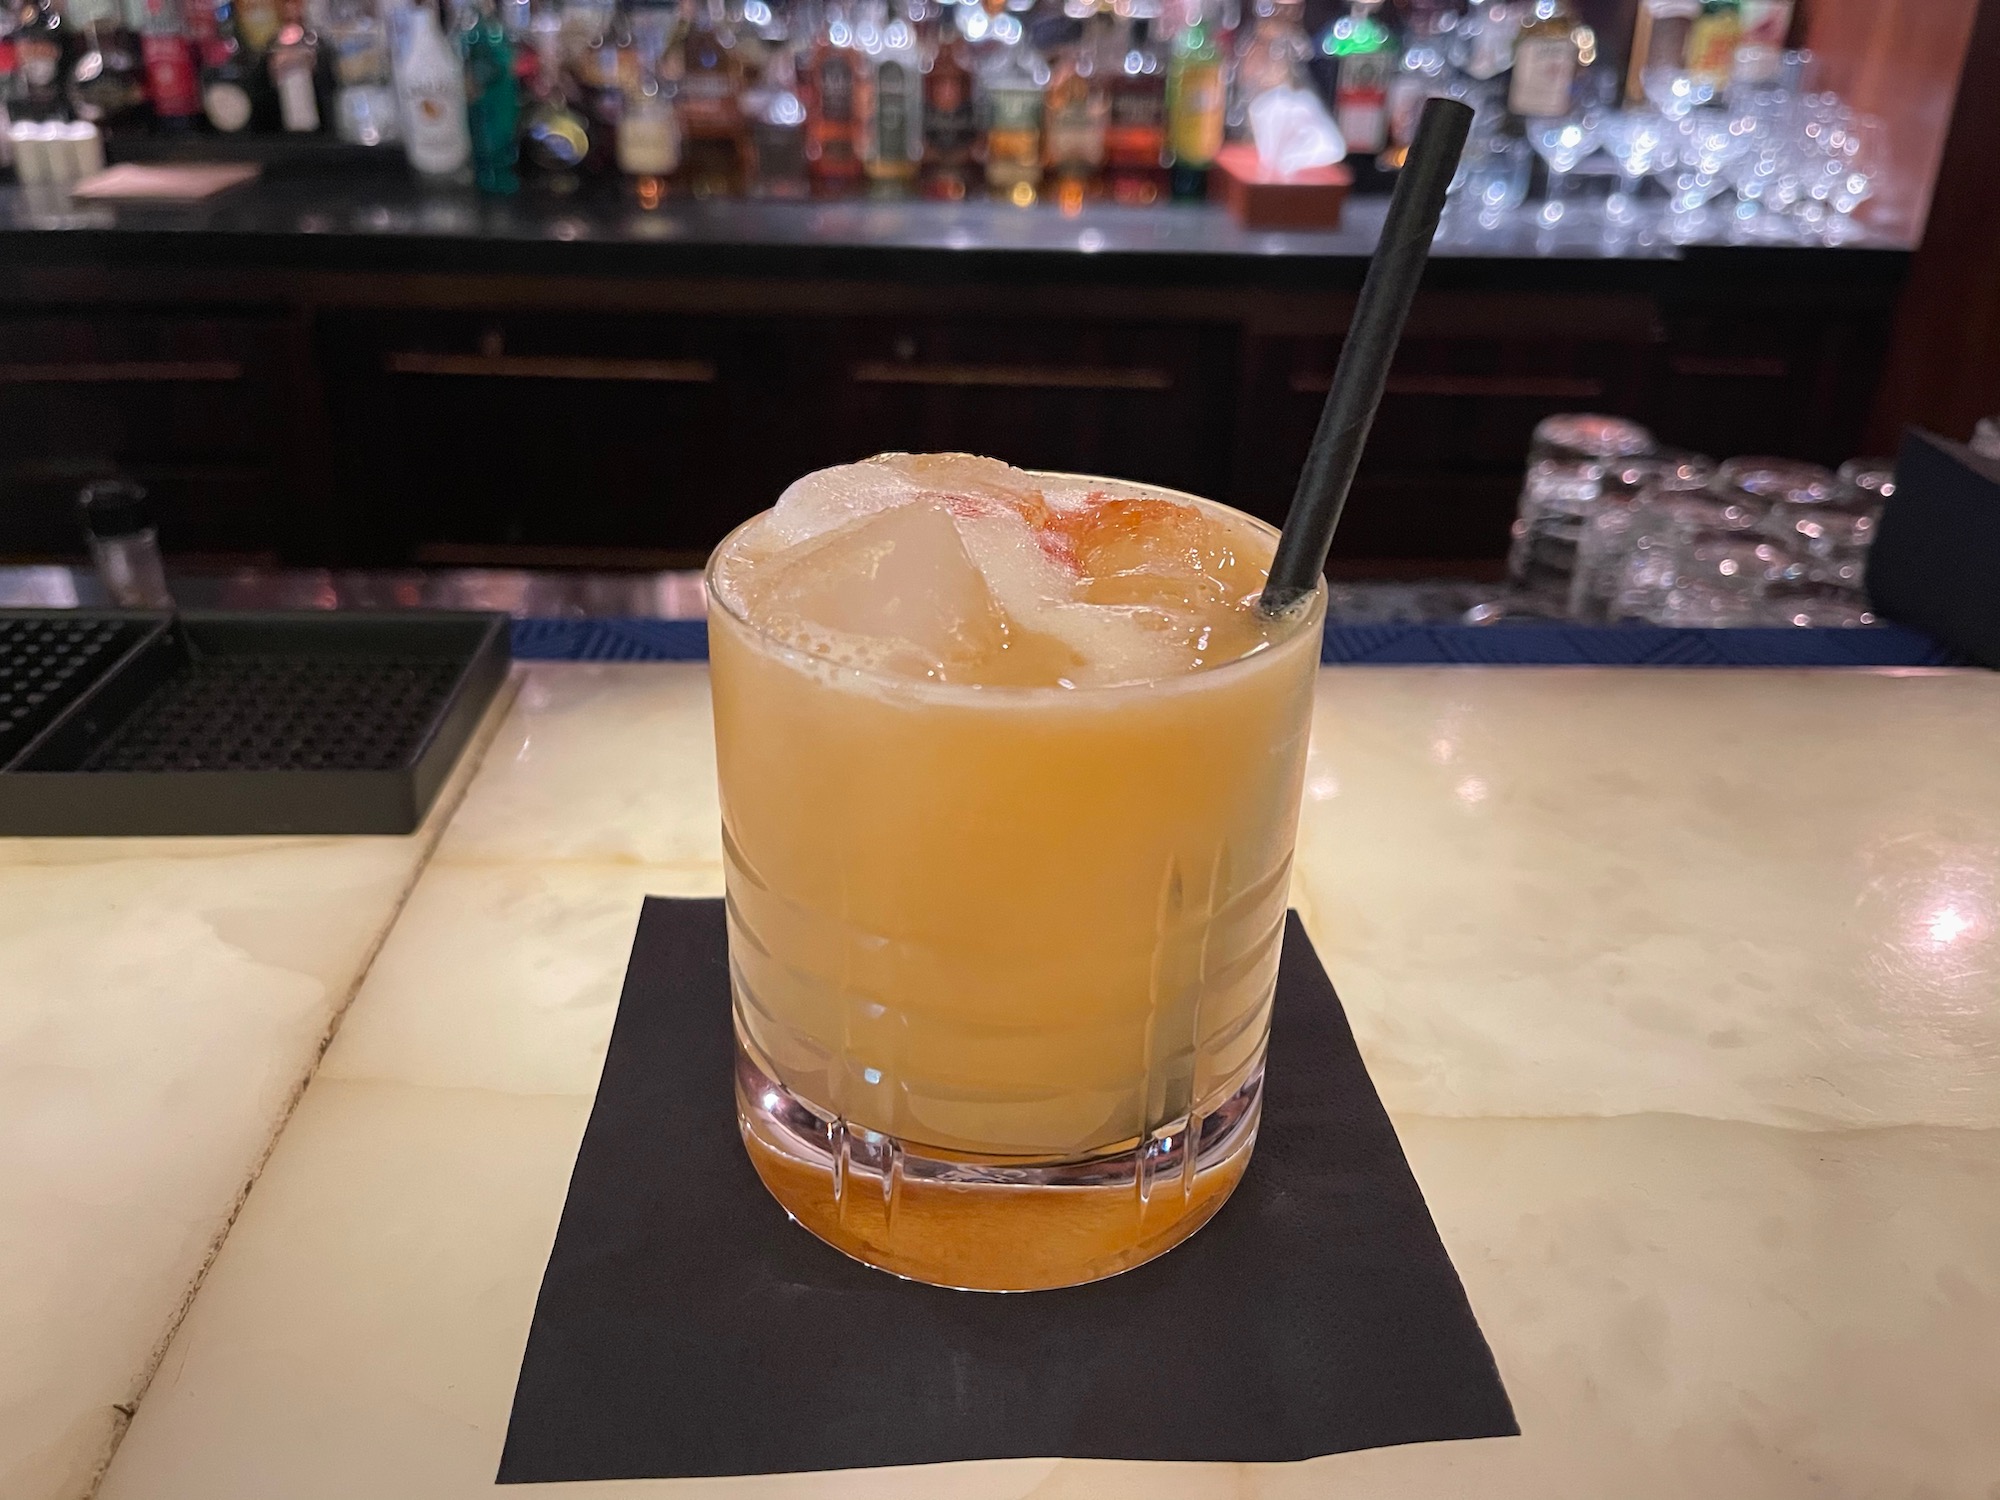 a glass of orange liquid with a straw